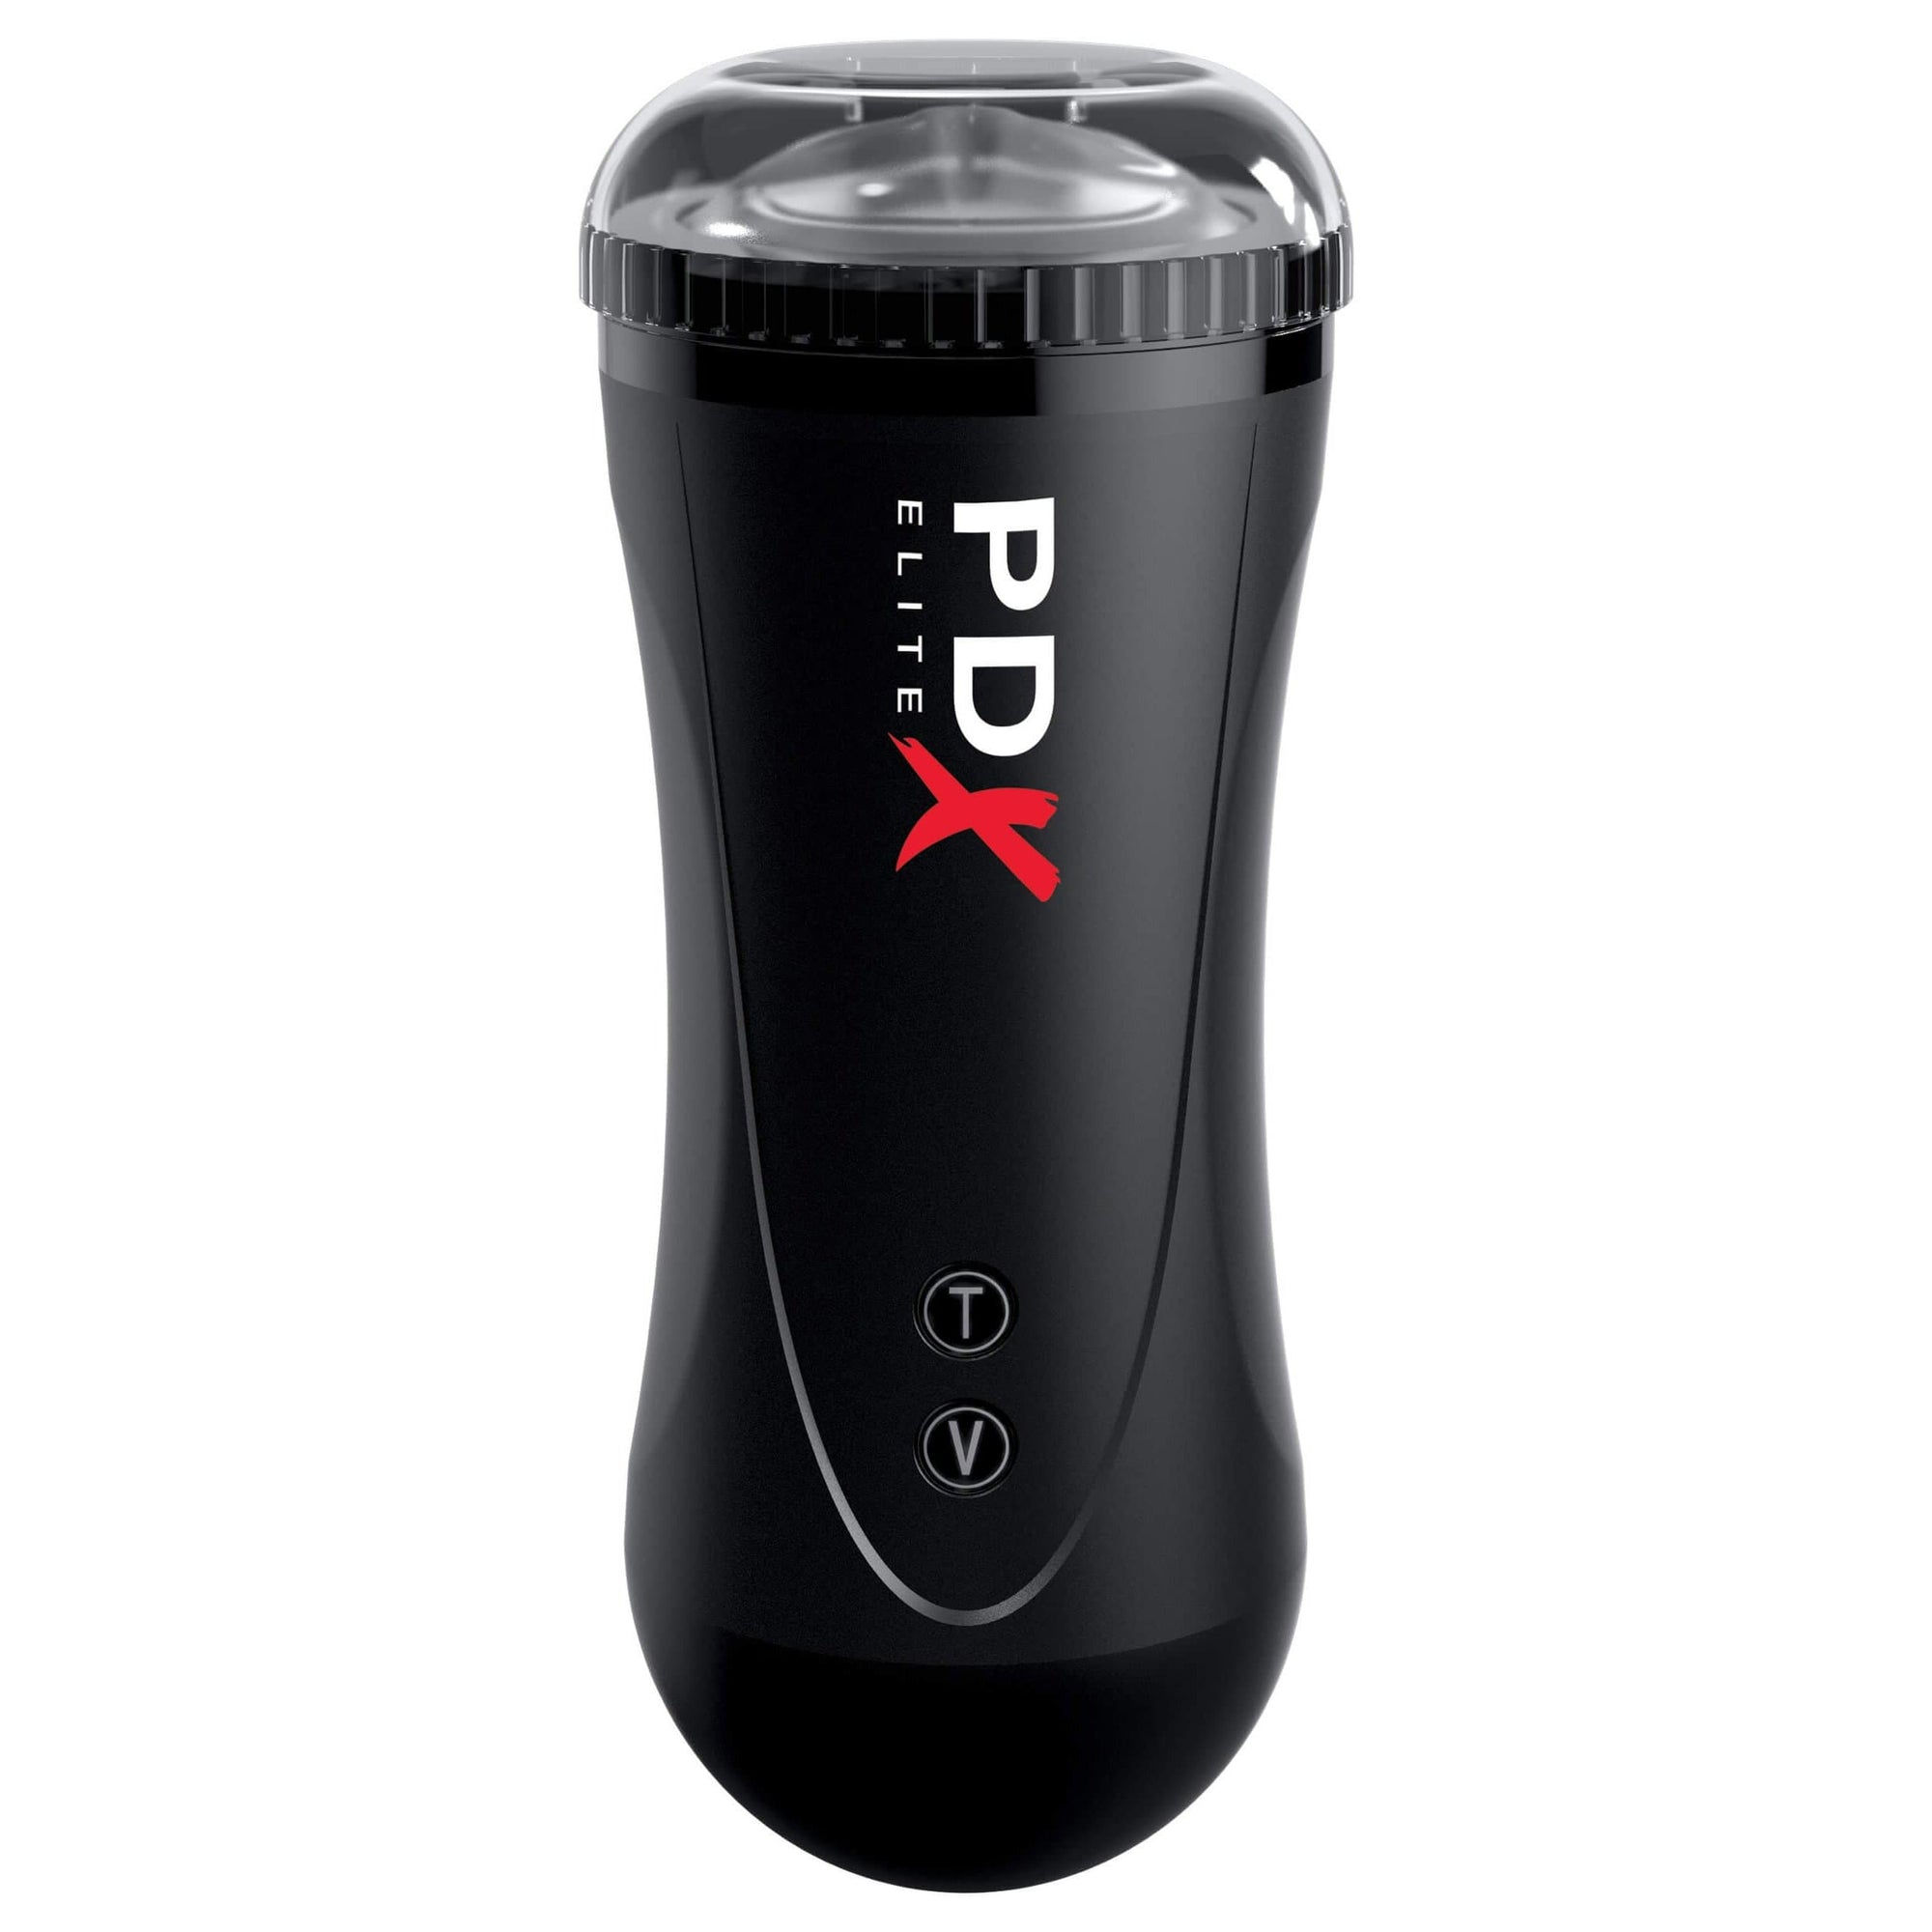 Pipedream - PDX Elite Moto Stroker Mouth Masturbator (Black) -  Masturbator Mouth (Vibration) Rechargeable  Durio.sg